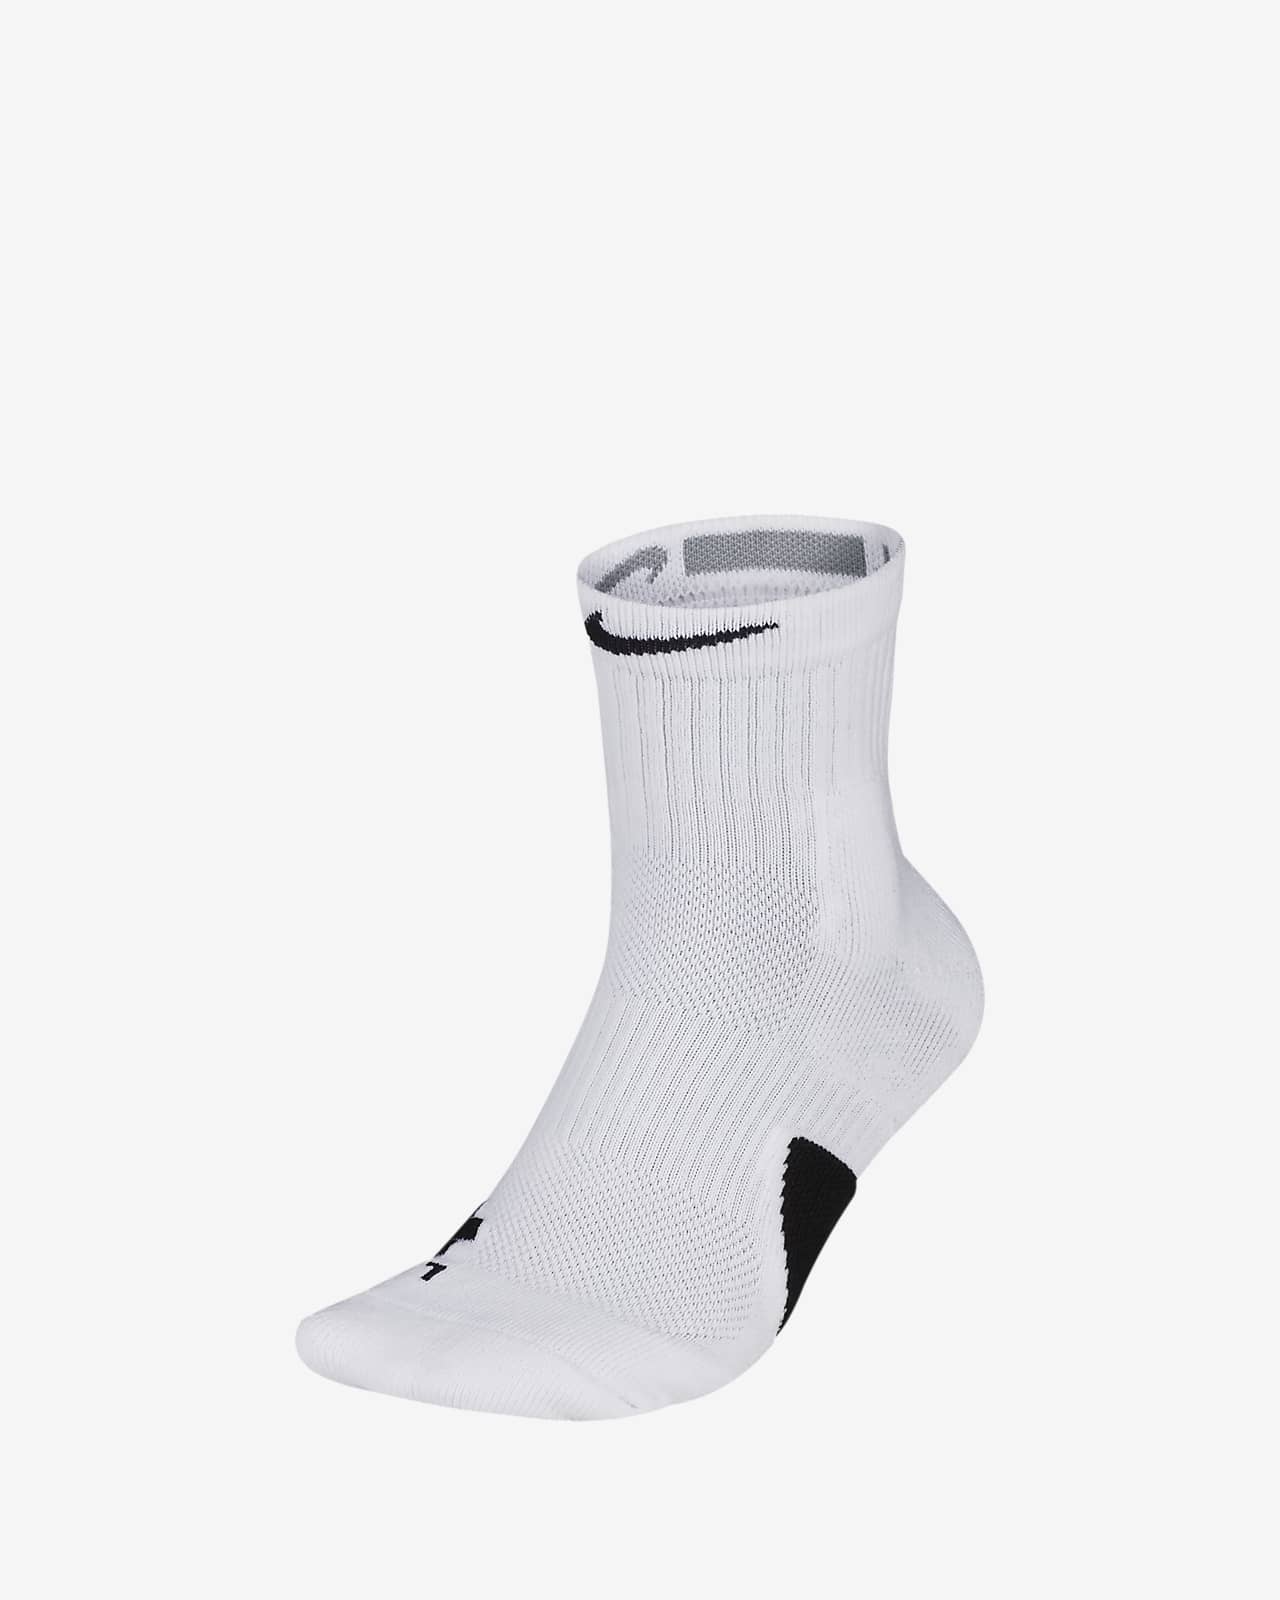 nike basketball socks